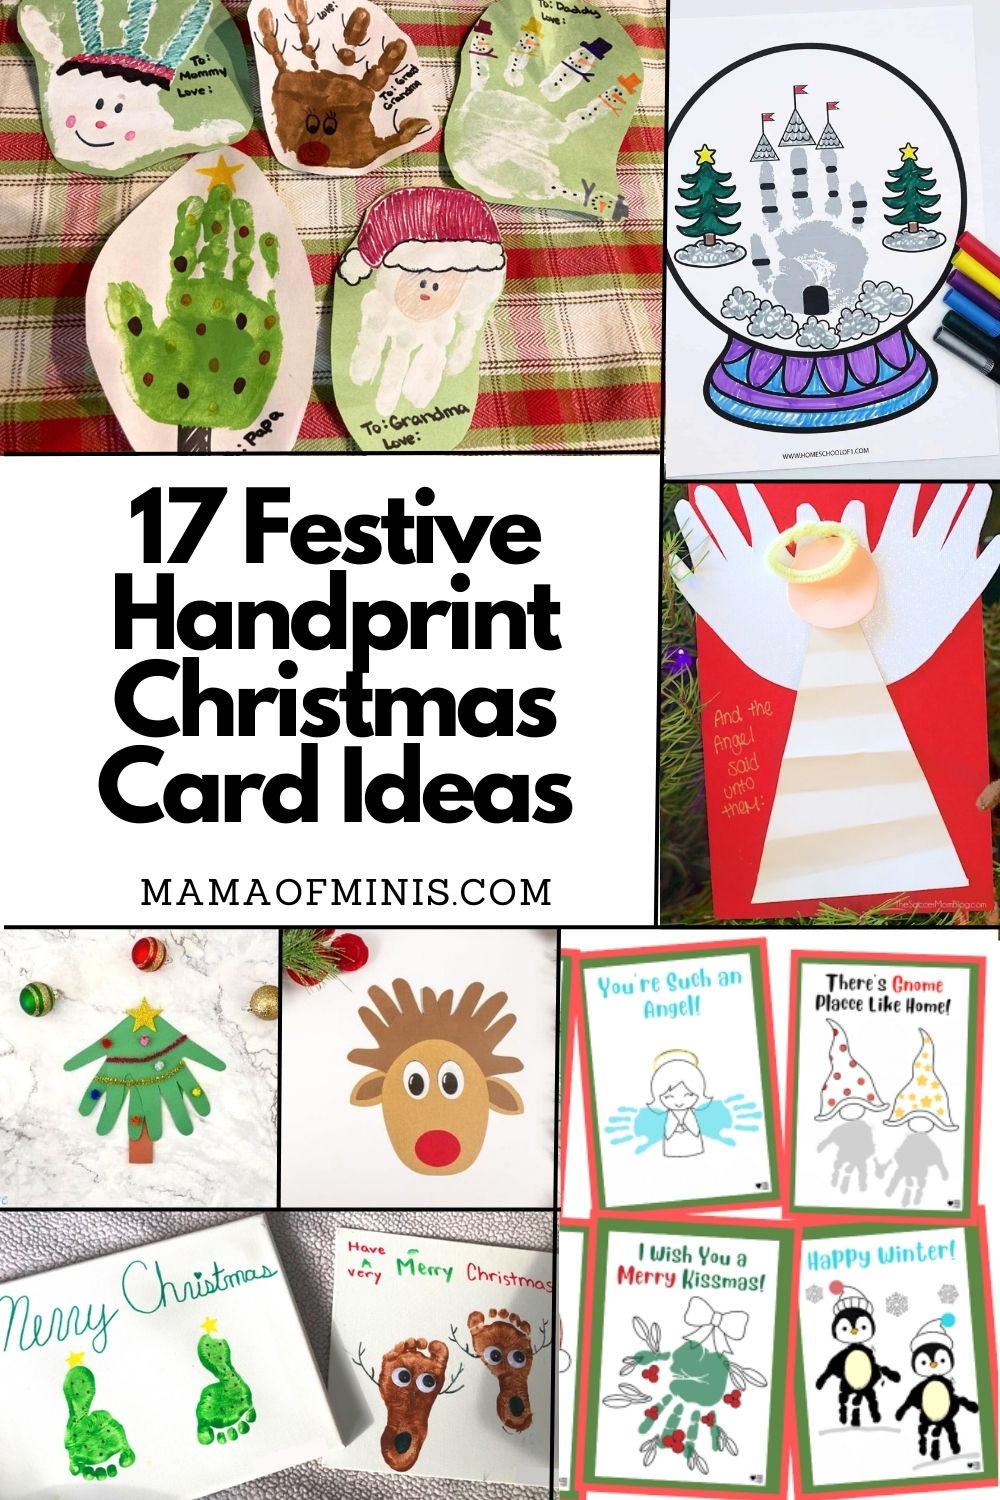 17 Festive Handprint Christmas Card Ideas for Preschoolers